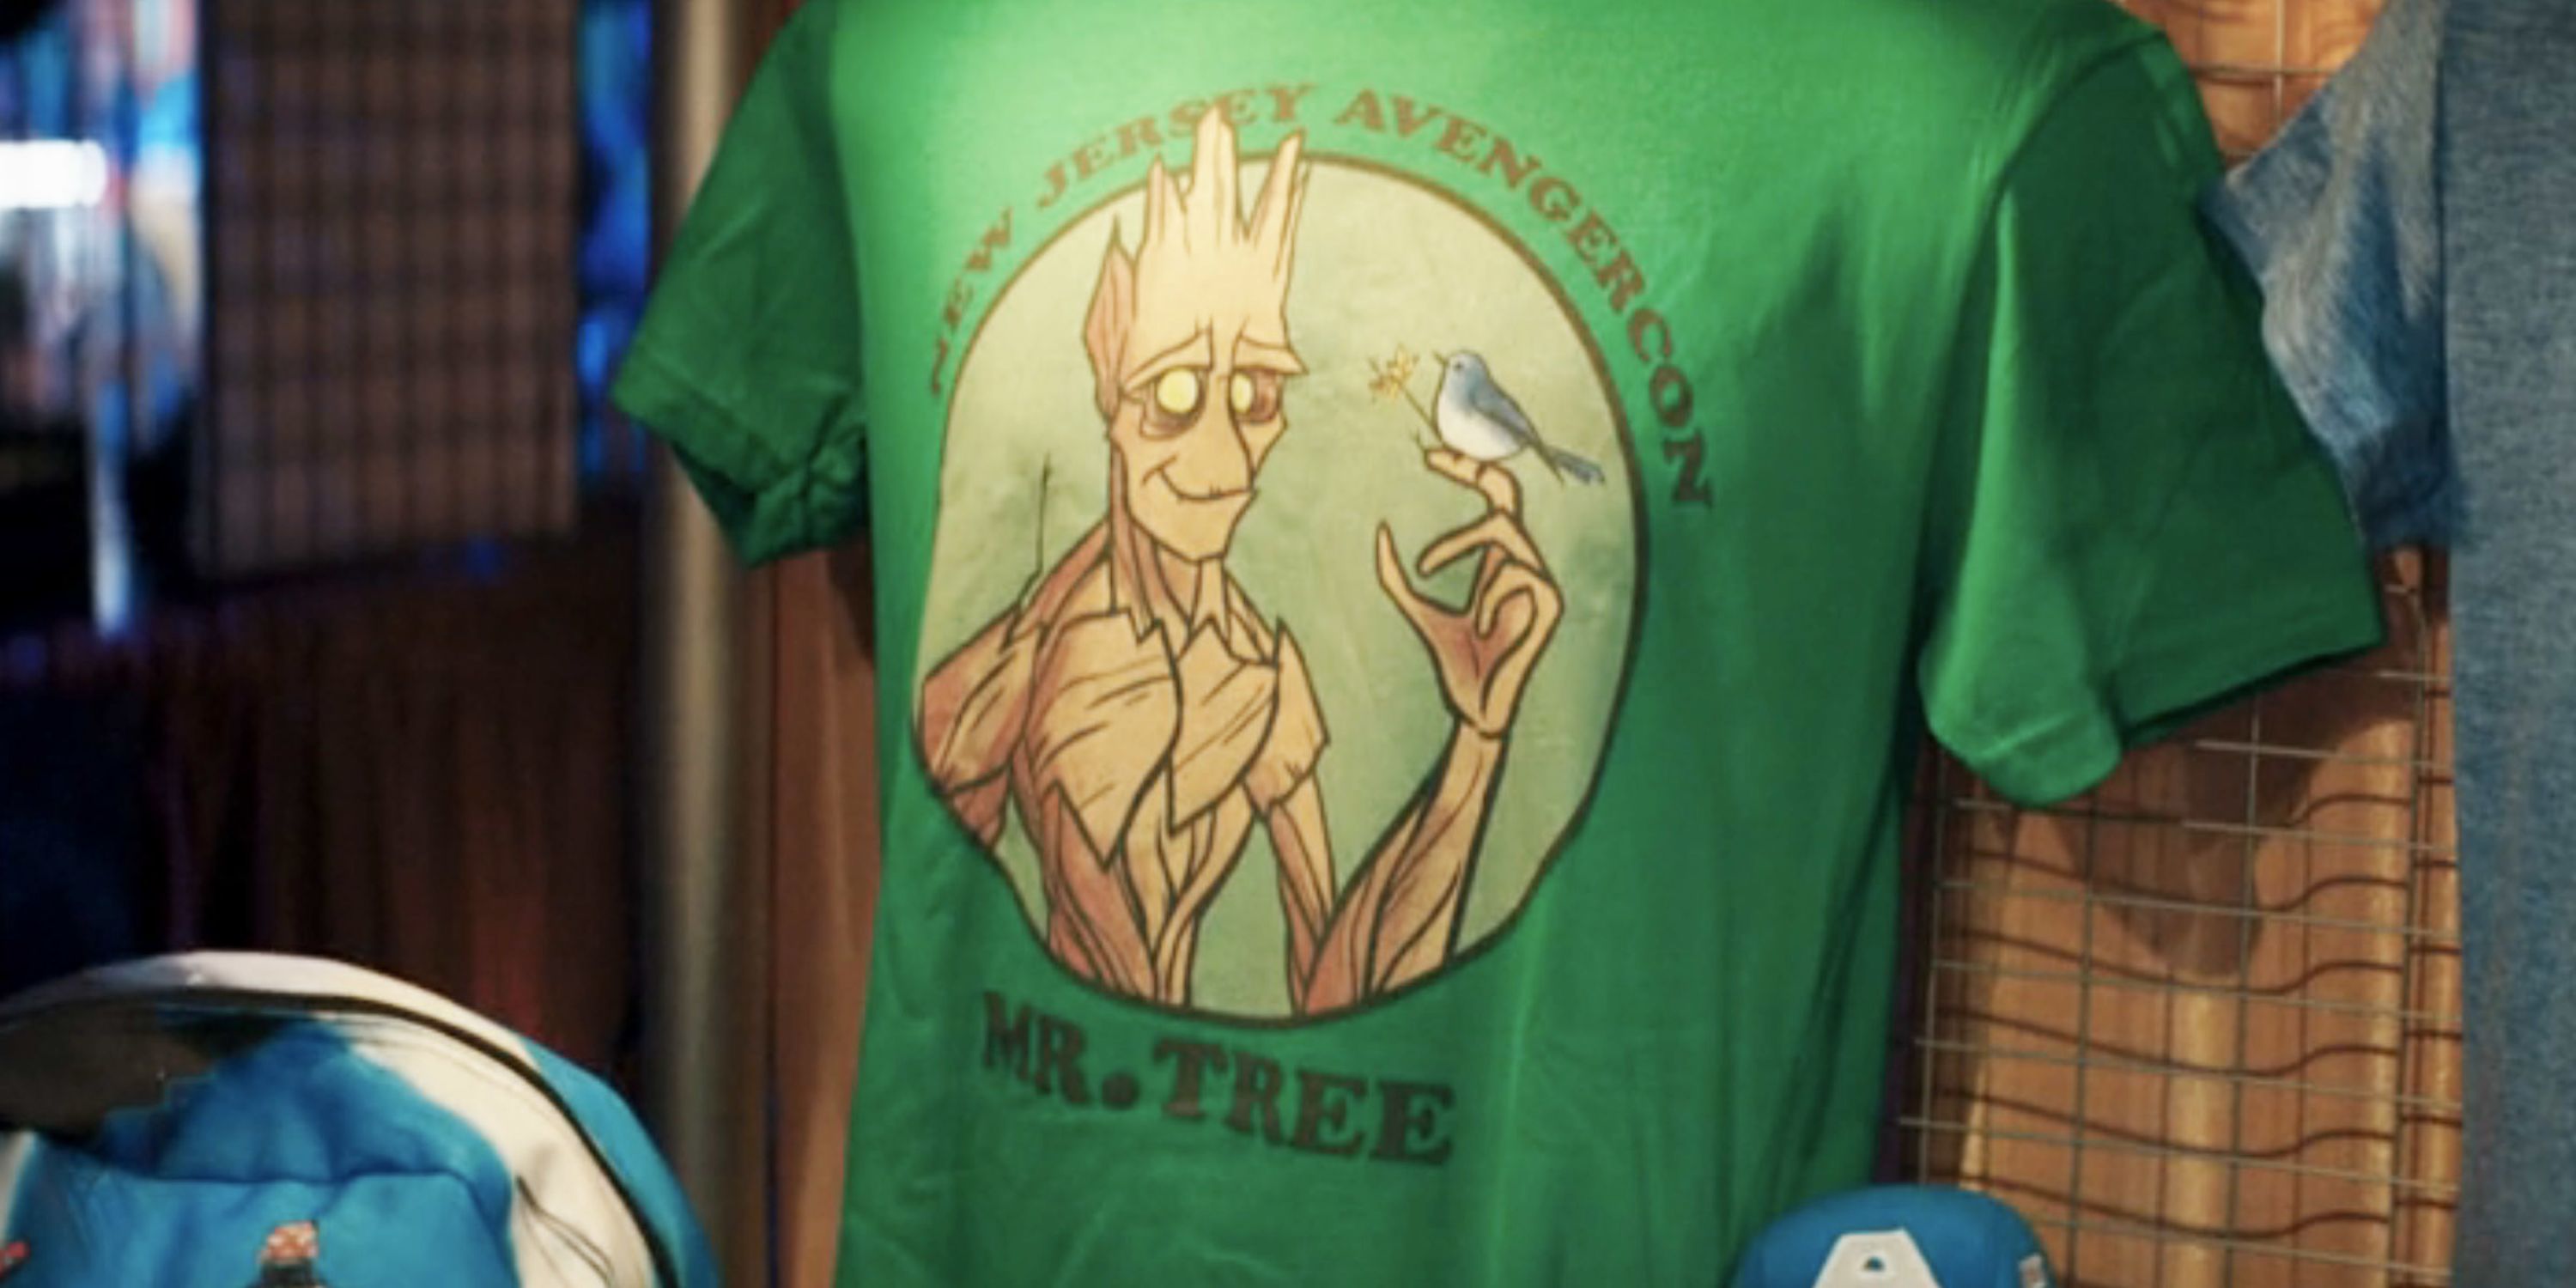 Mr Tree T-Shirt from AvengersCon in Ms. Marvel